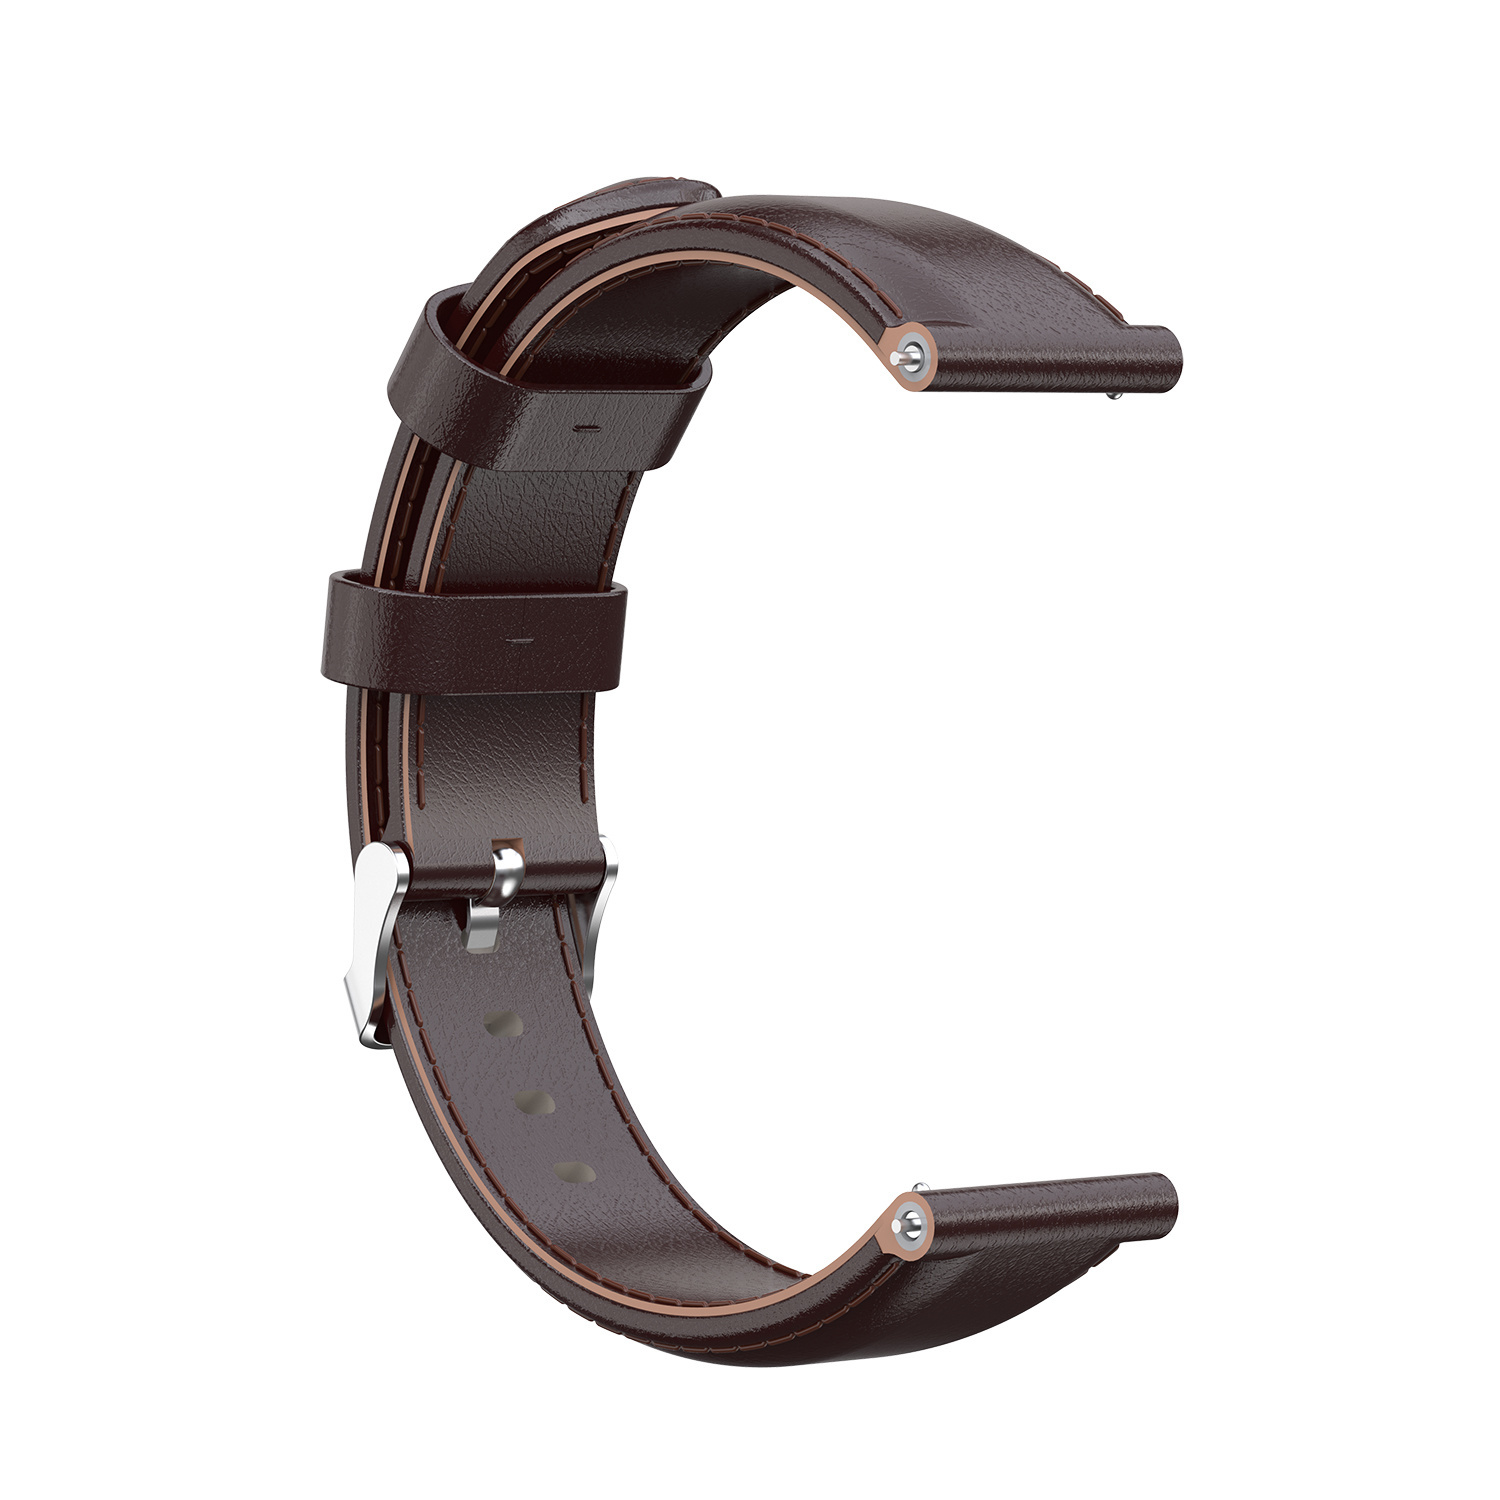 Cinturino in pelle per Samsung Galaxy Watch - marrone scuro